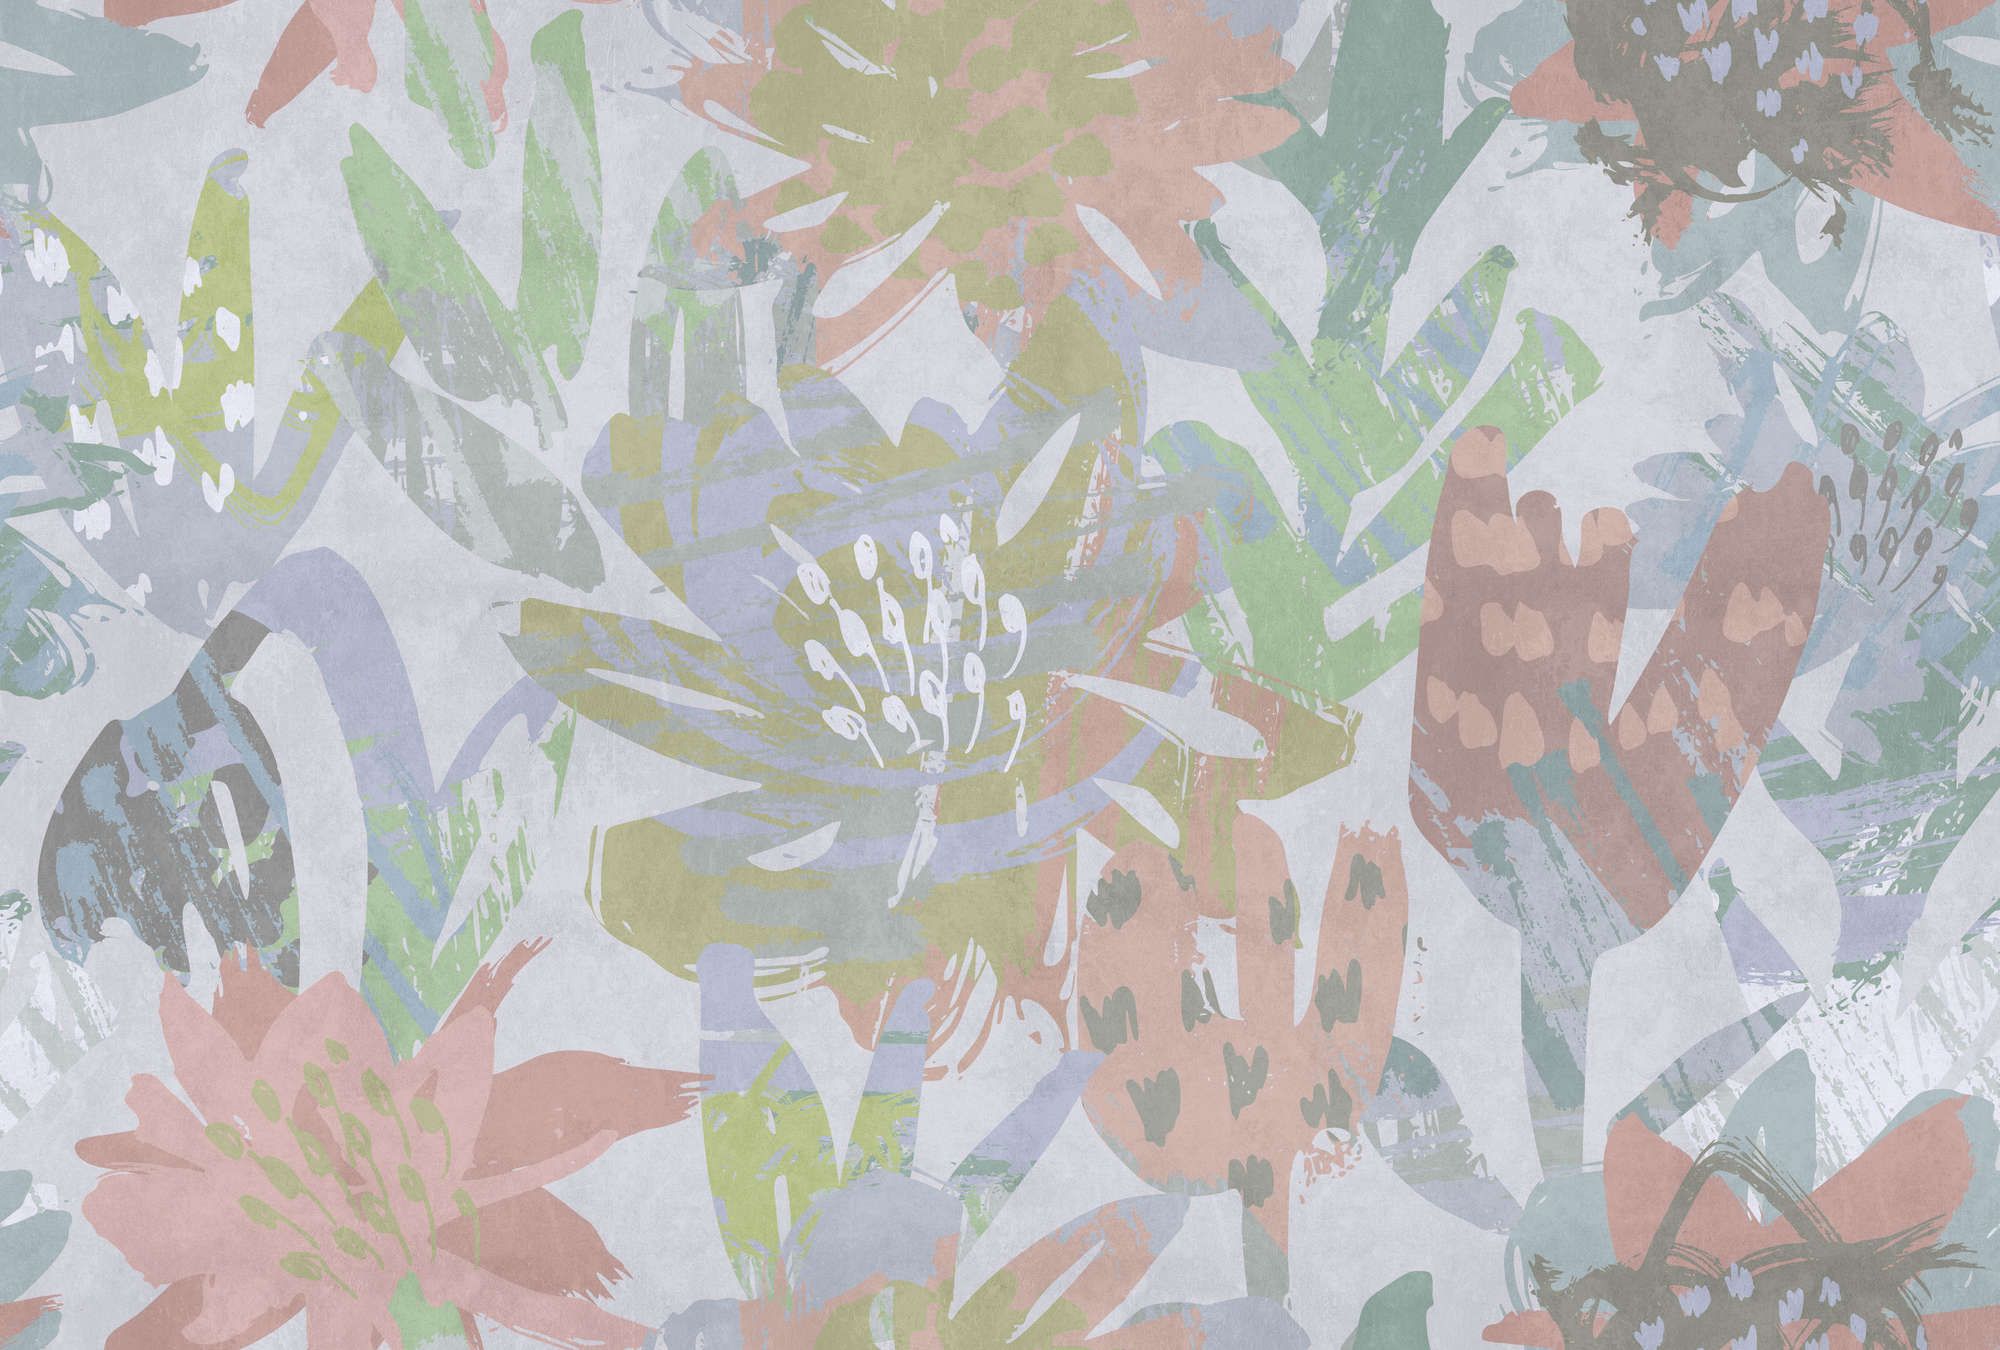             Photo wallpaper »sophia« - Colourful floral pattern on concrete plaster texture - Matt, smooth non-woven fabric
        